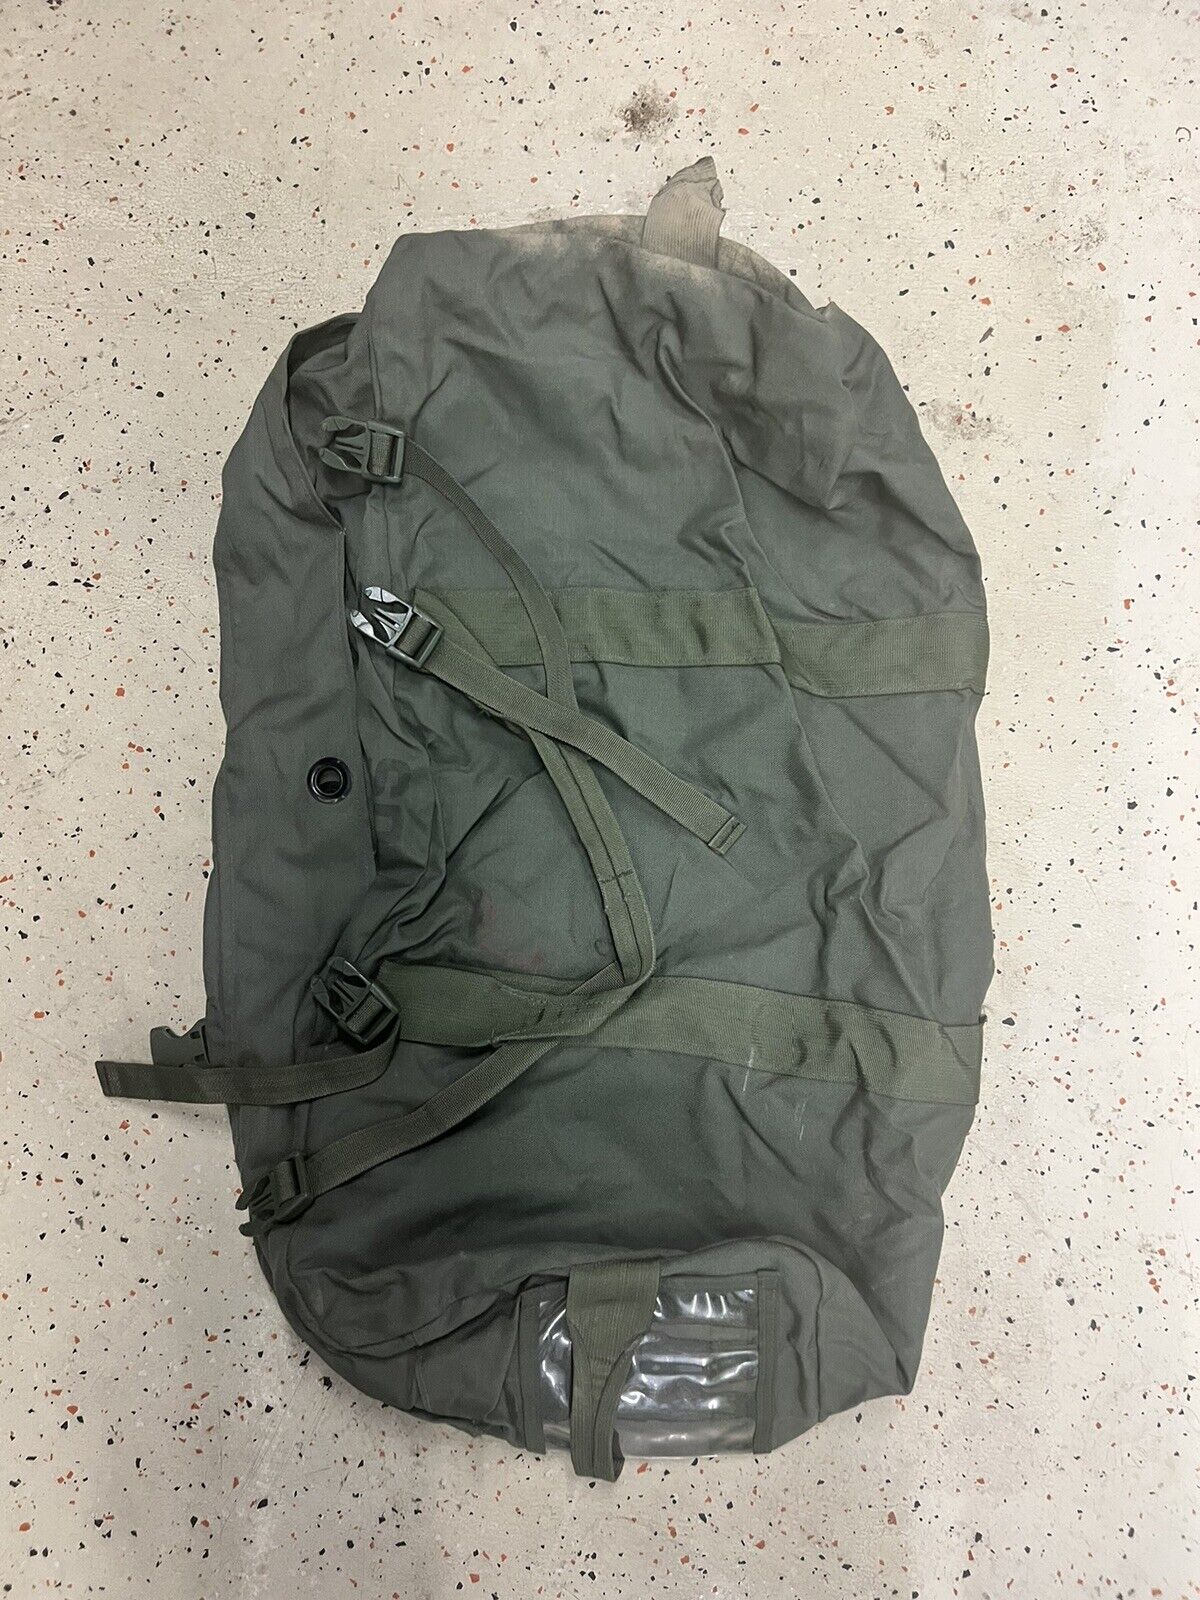 usgi improved Deployment duffel bag